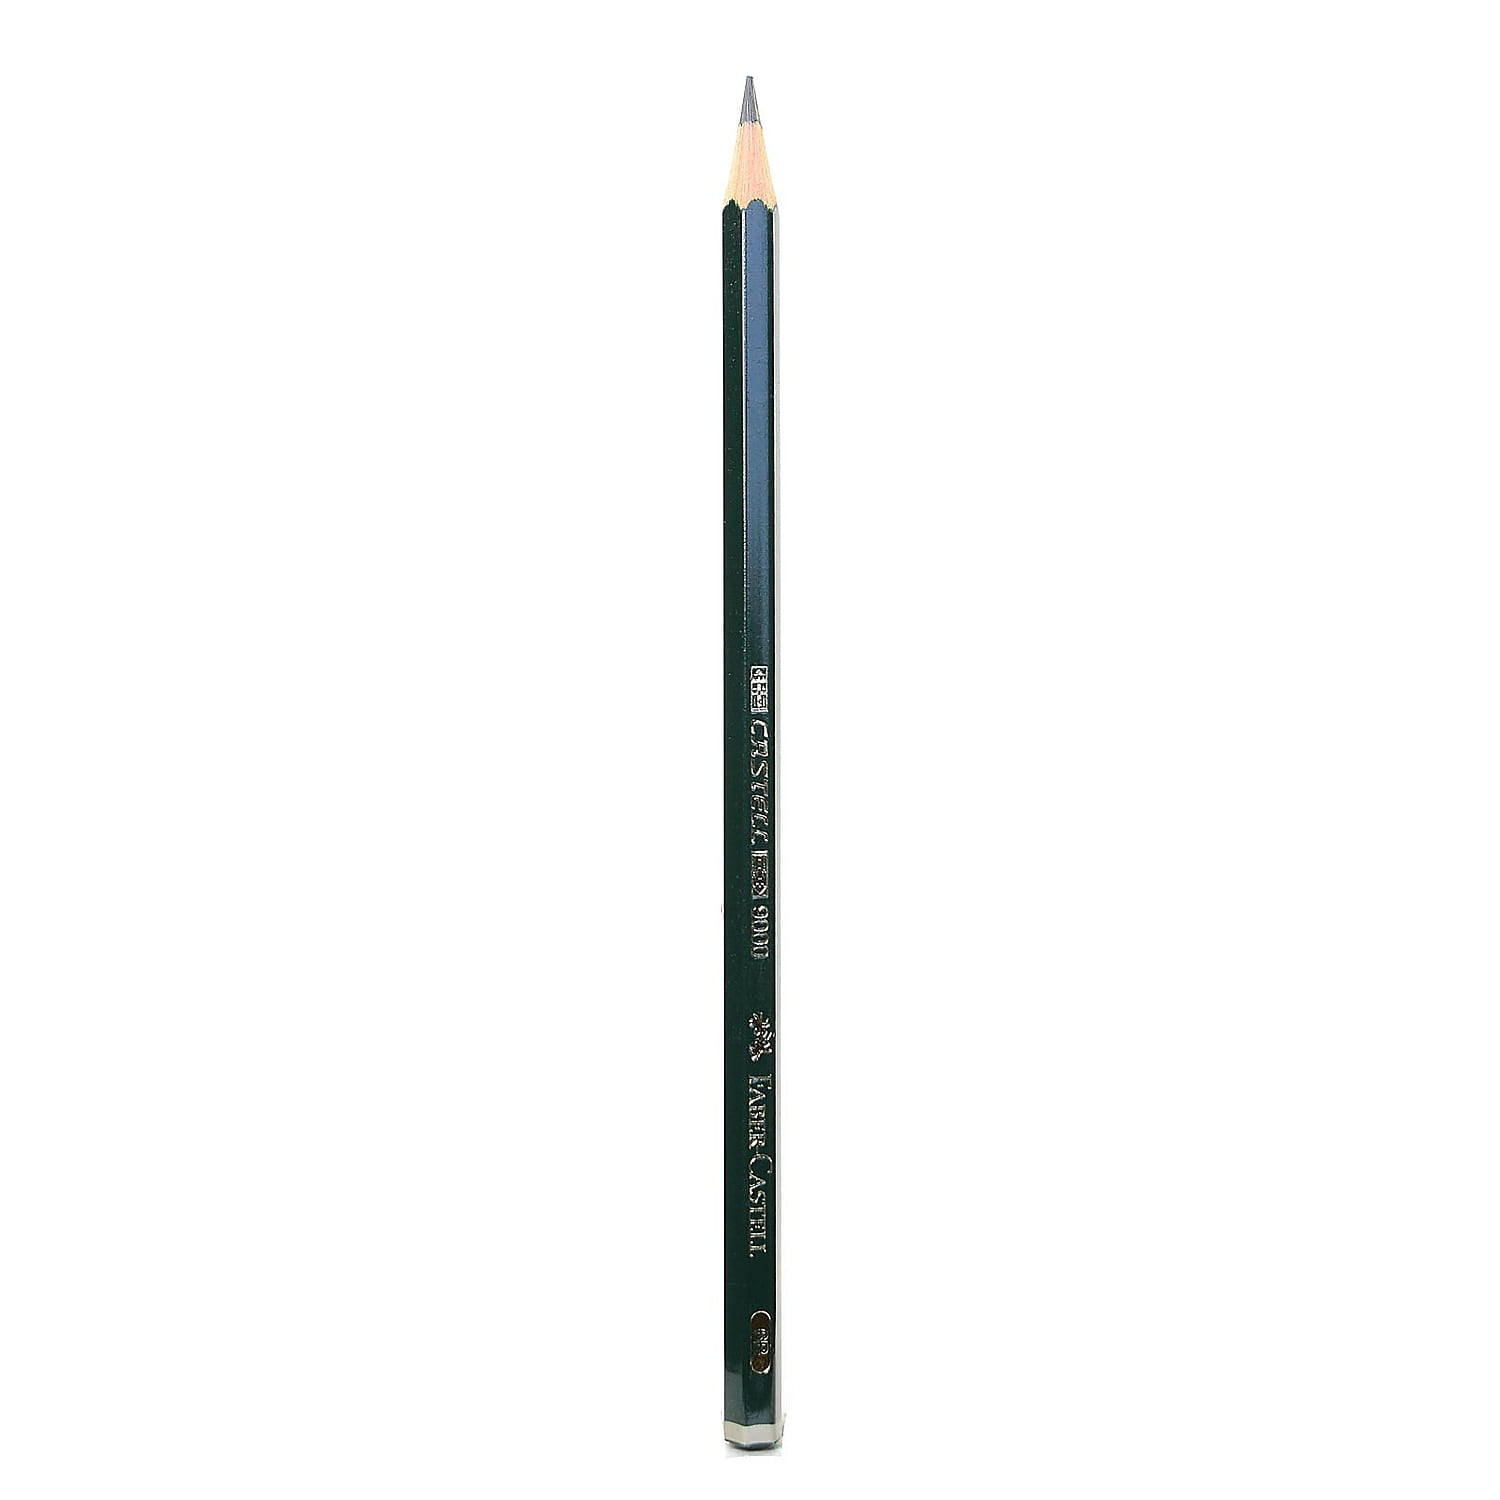 Blick Studio Drawing Pencil - 6B